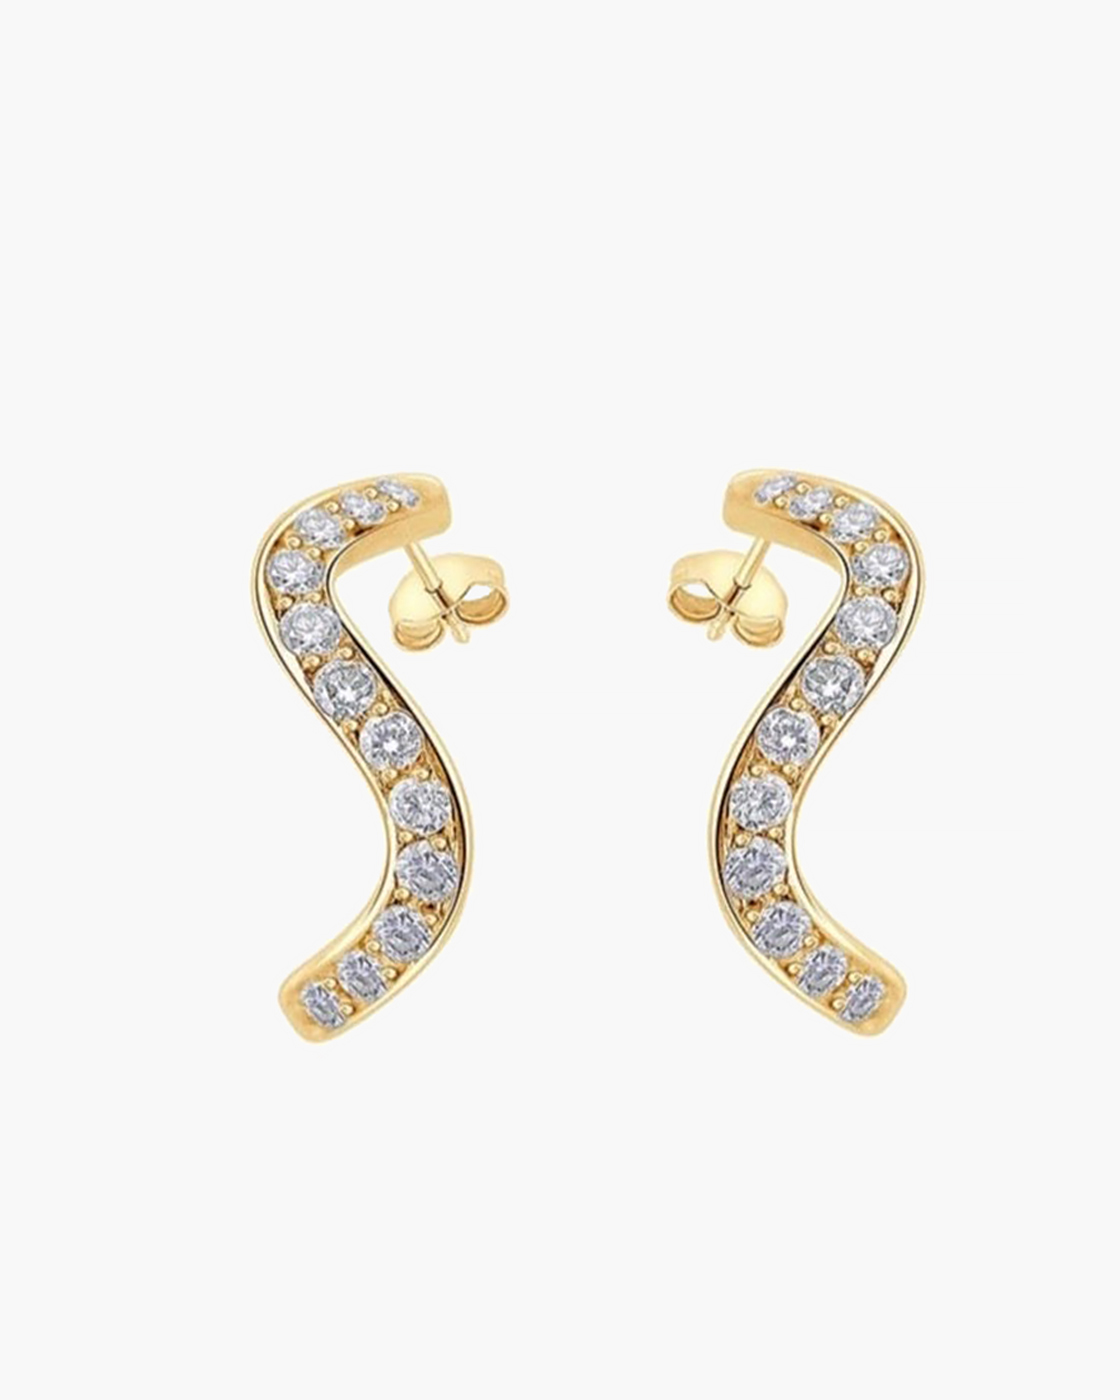 Petite Comete Medium Gold Diamond Earrings (Lab-grown)